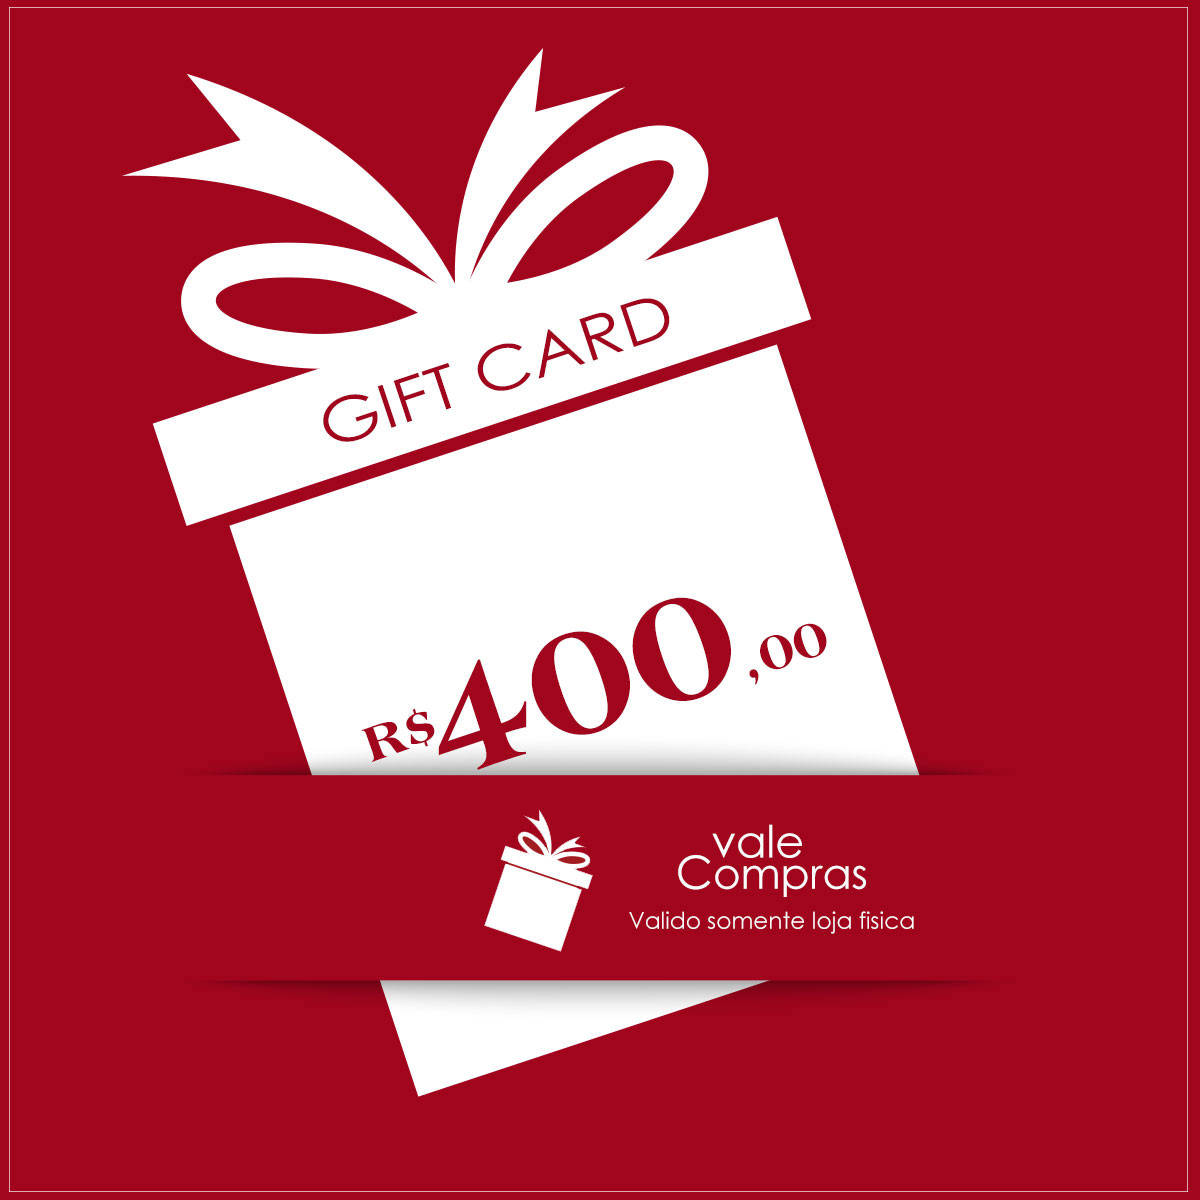 Gift Card Casa Allegro R$400